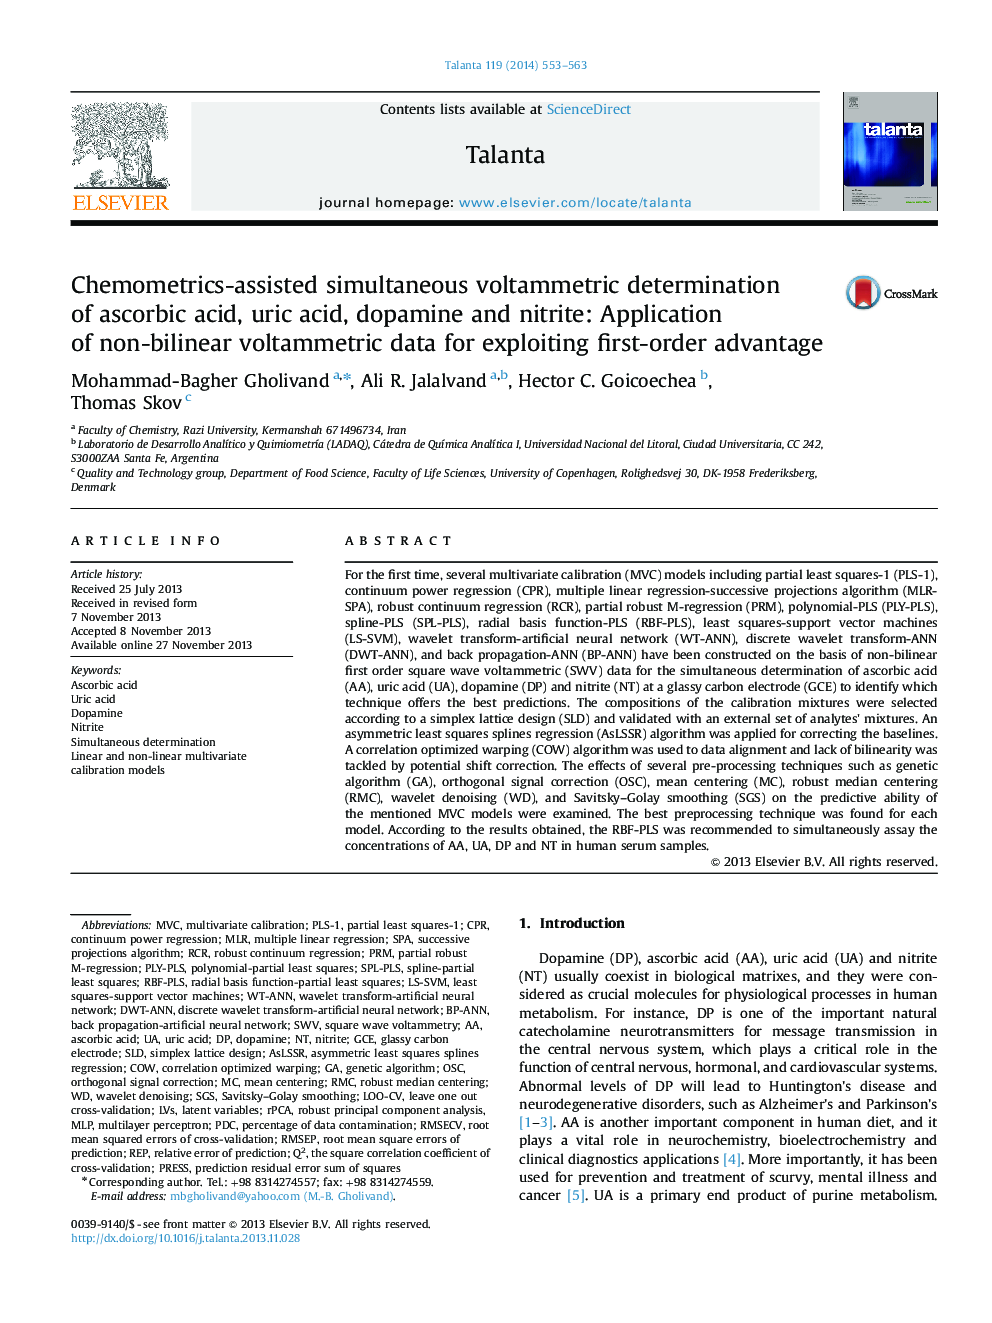 Chemometrics-assisted simultaneous voltammetric determination of ascorbic acid, uric acid, dopamine and nitrite: Application of non-bilinear voltammetric data for exploiting first-order advantage